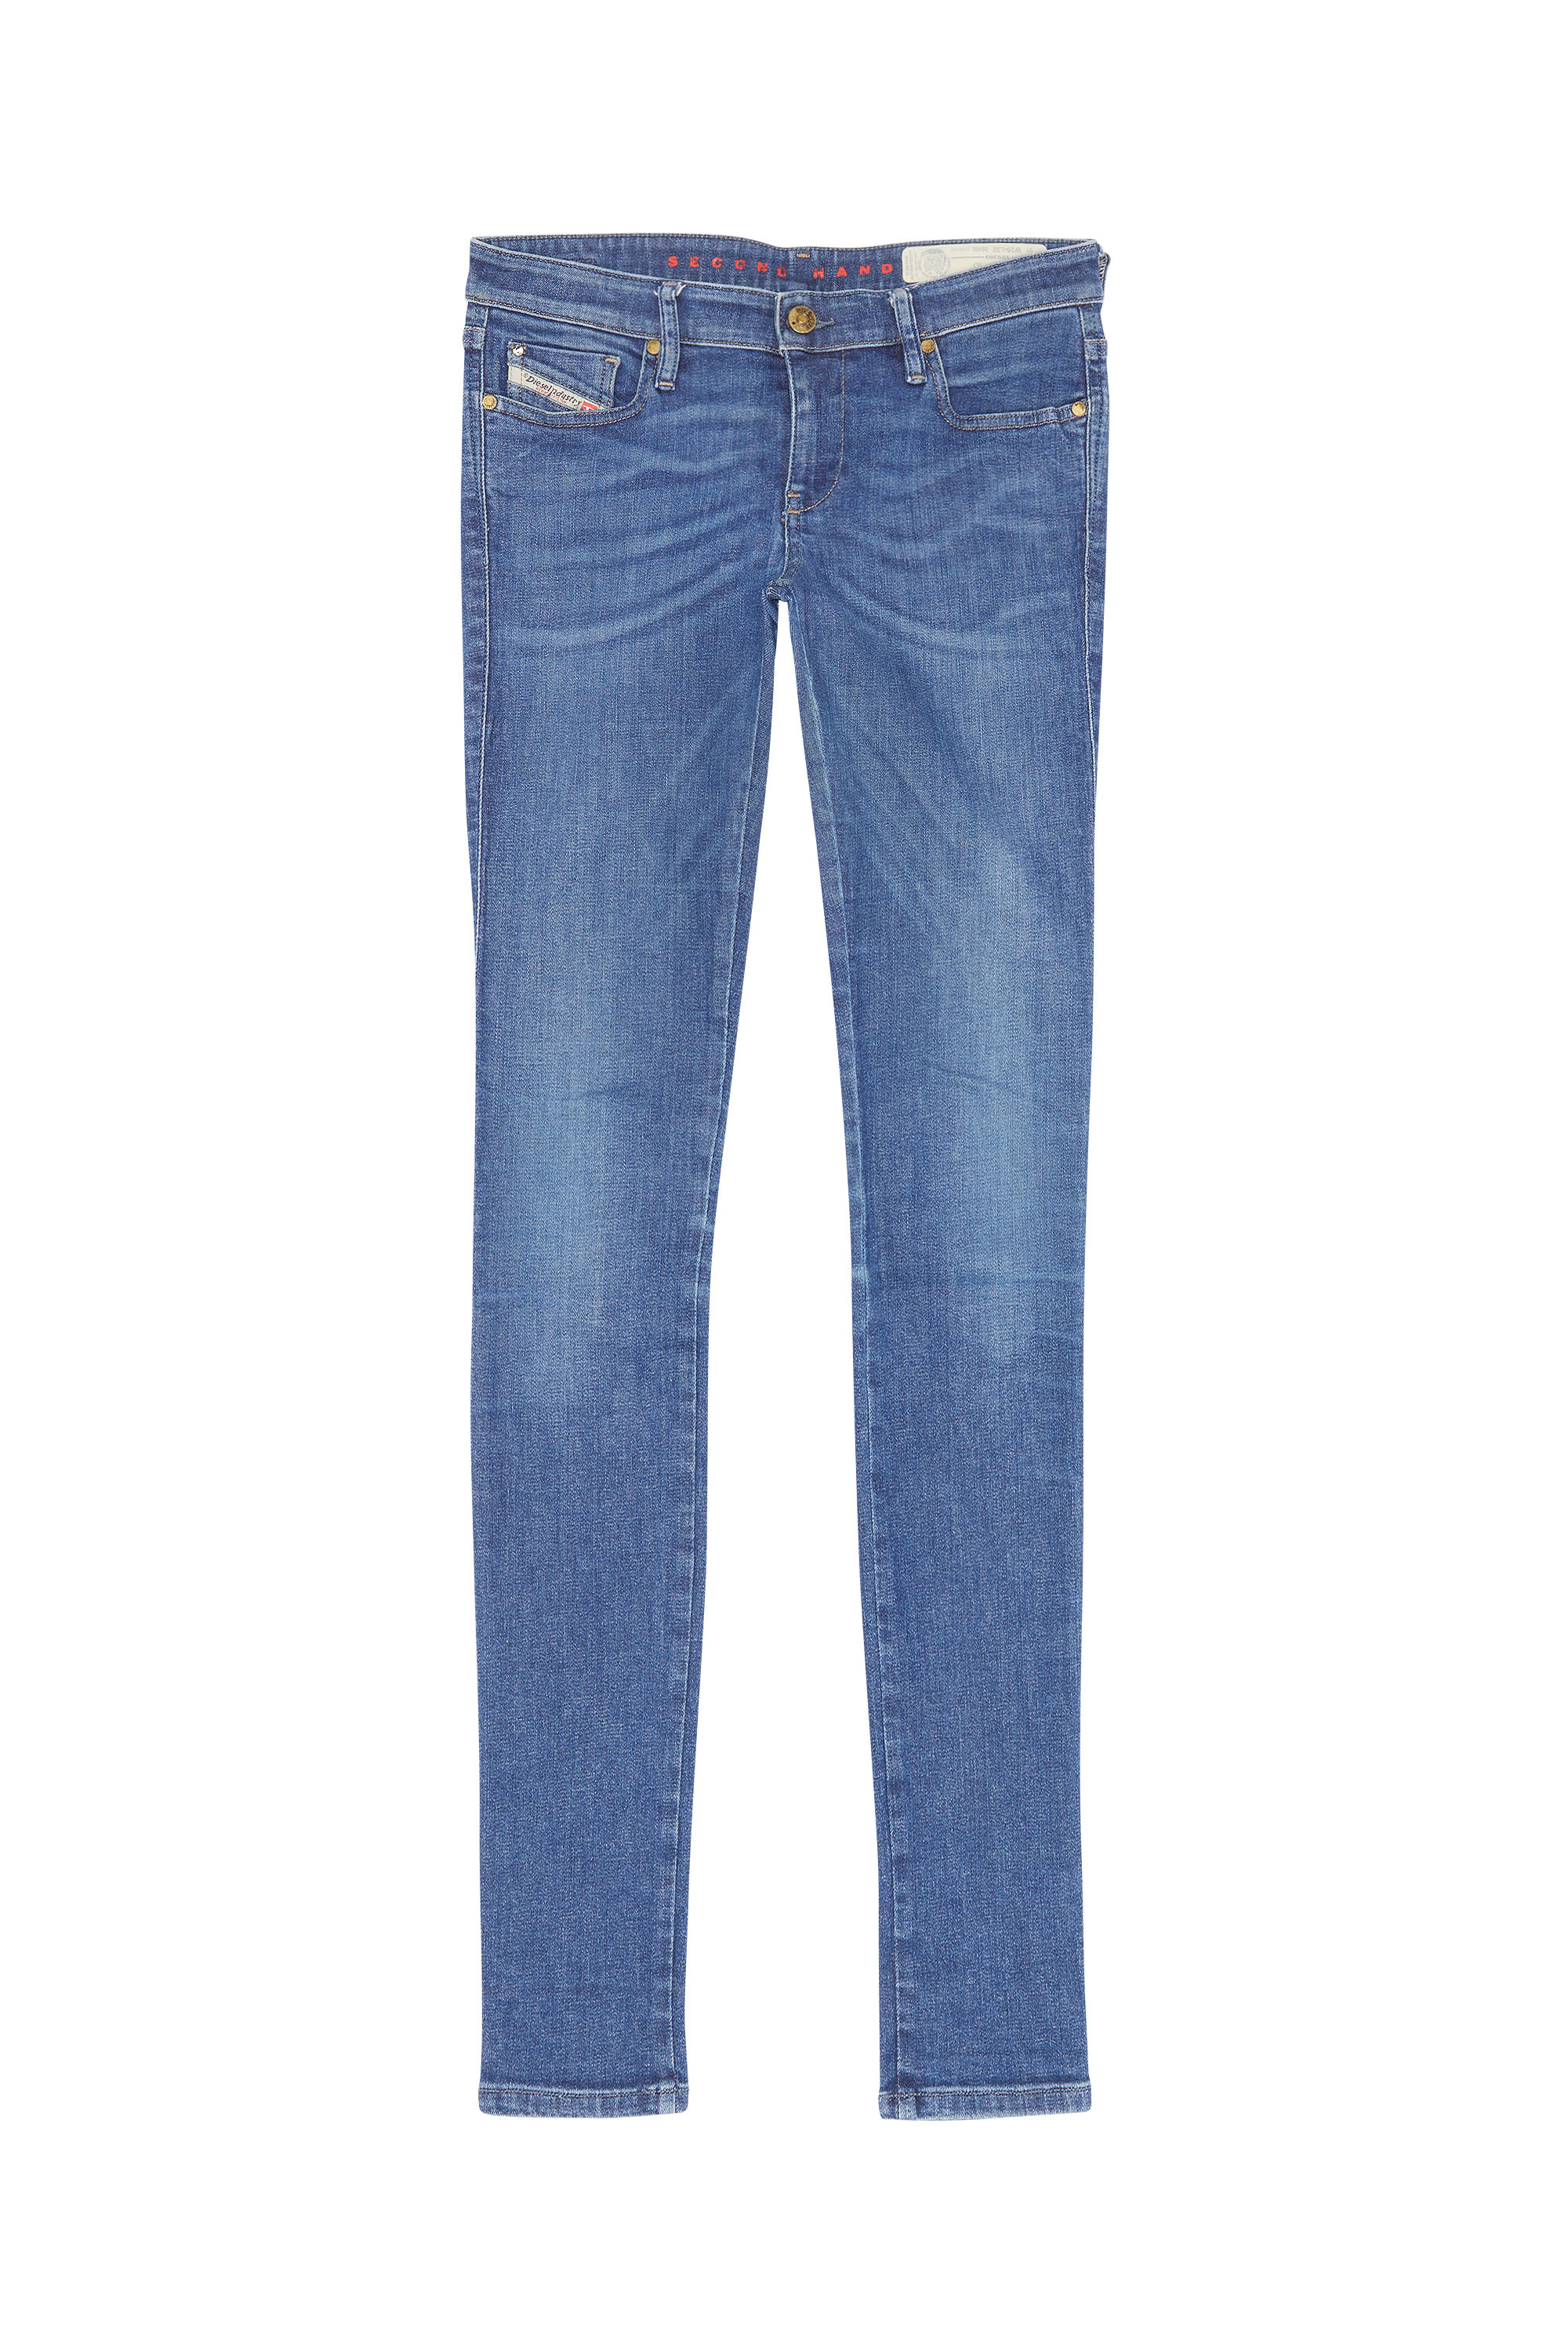 SKINZEE-LOW, Medium blue - Jeans